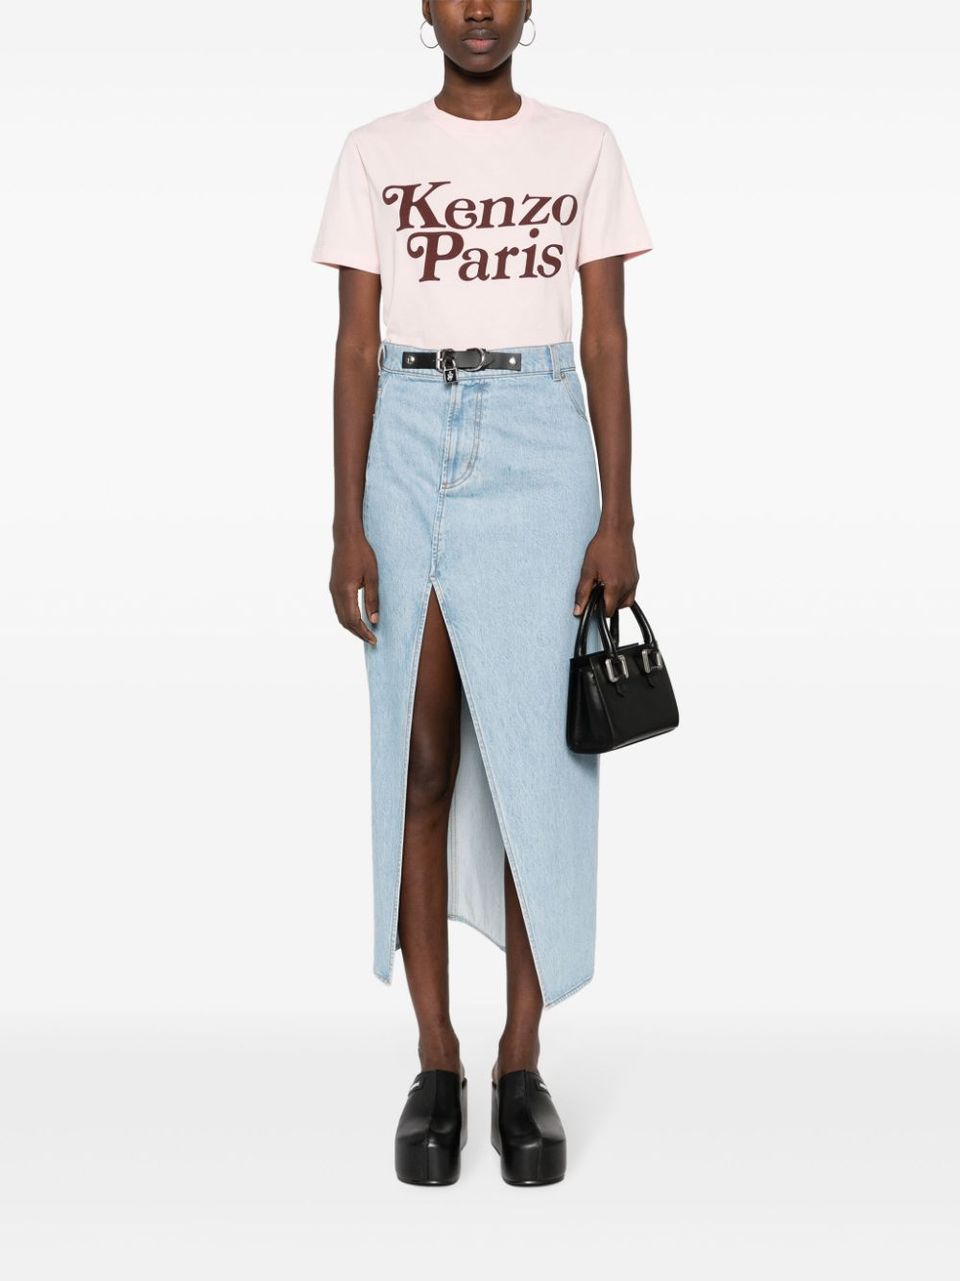 KENZO by Verdy t-shirt